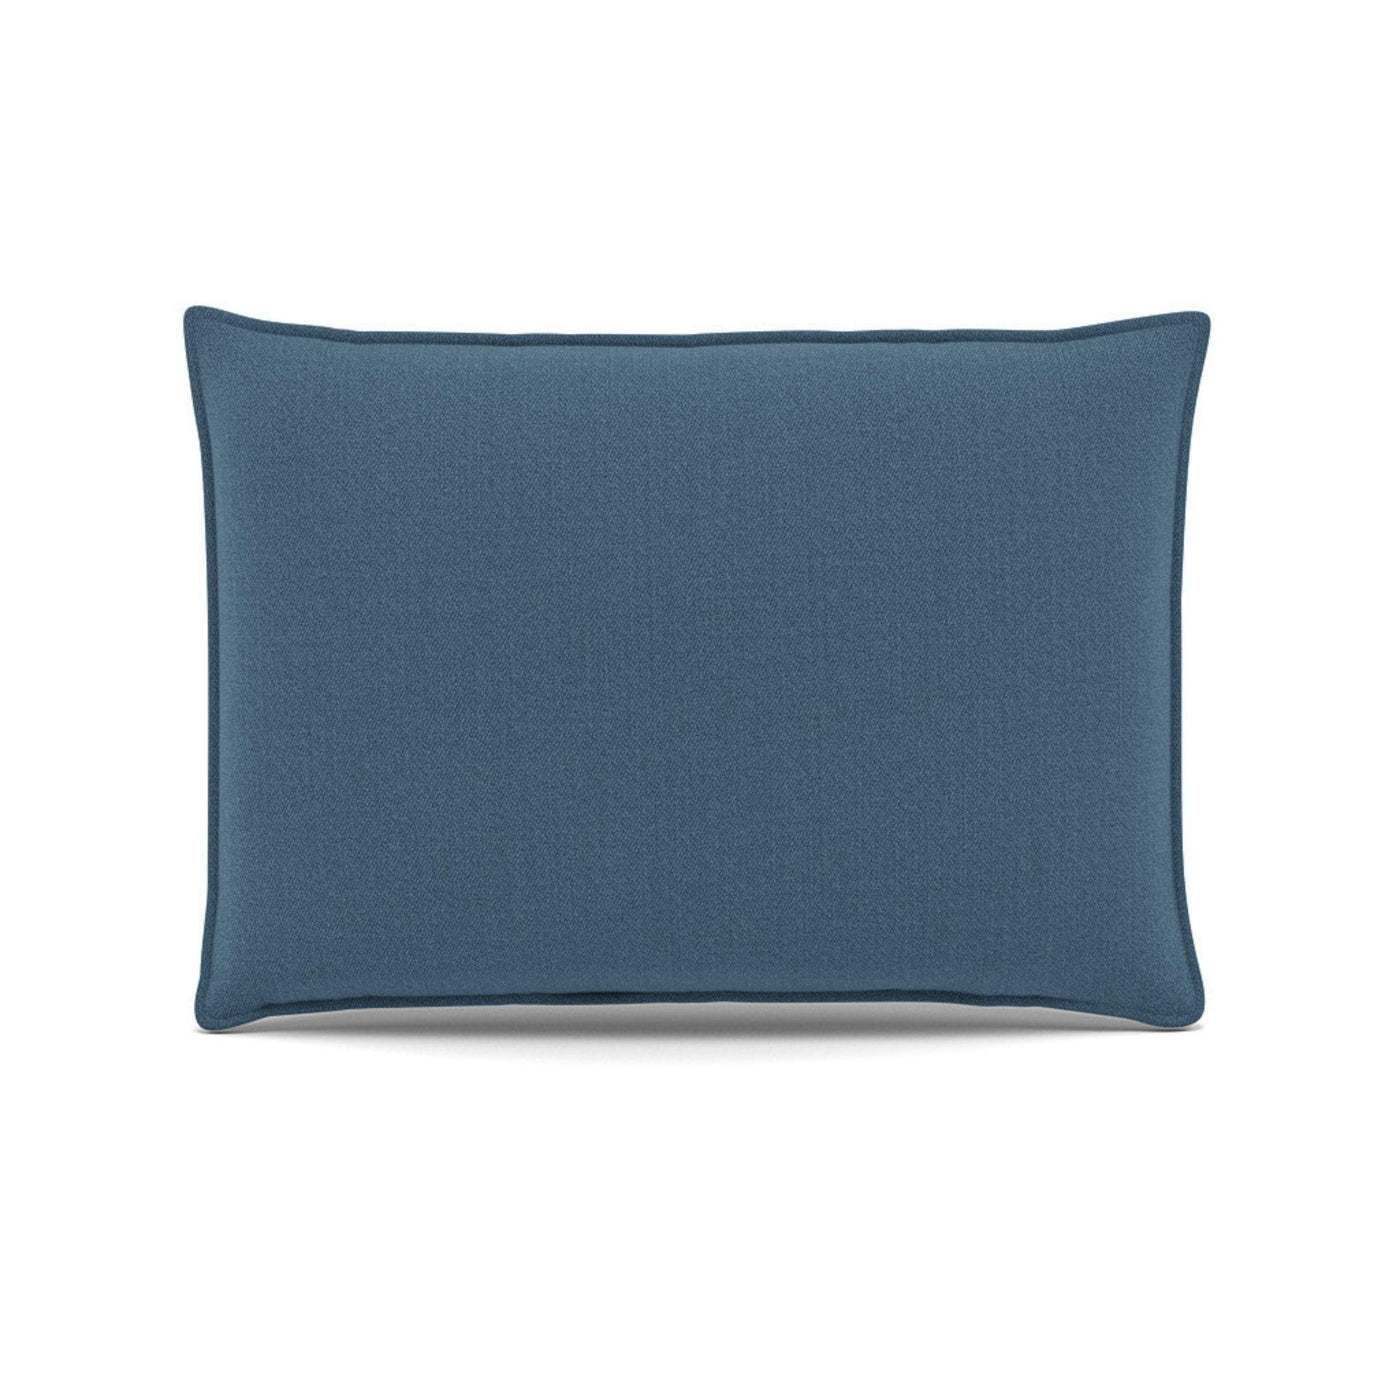 Muuto's In Situ Cushion for the In Situ Modular Sofa series in vidar 733, 70x50cm. Made to order from someday designs. #colour_vidar-733